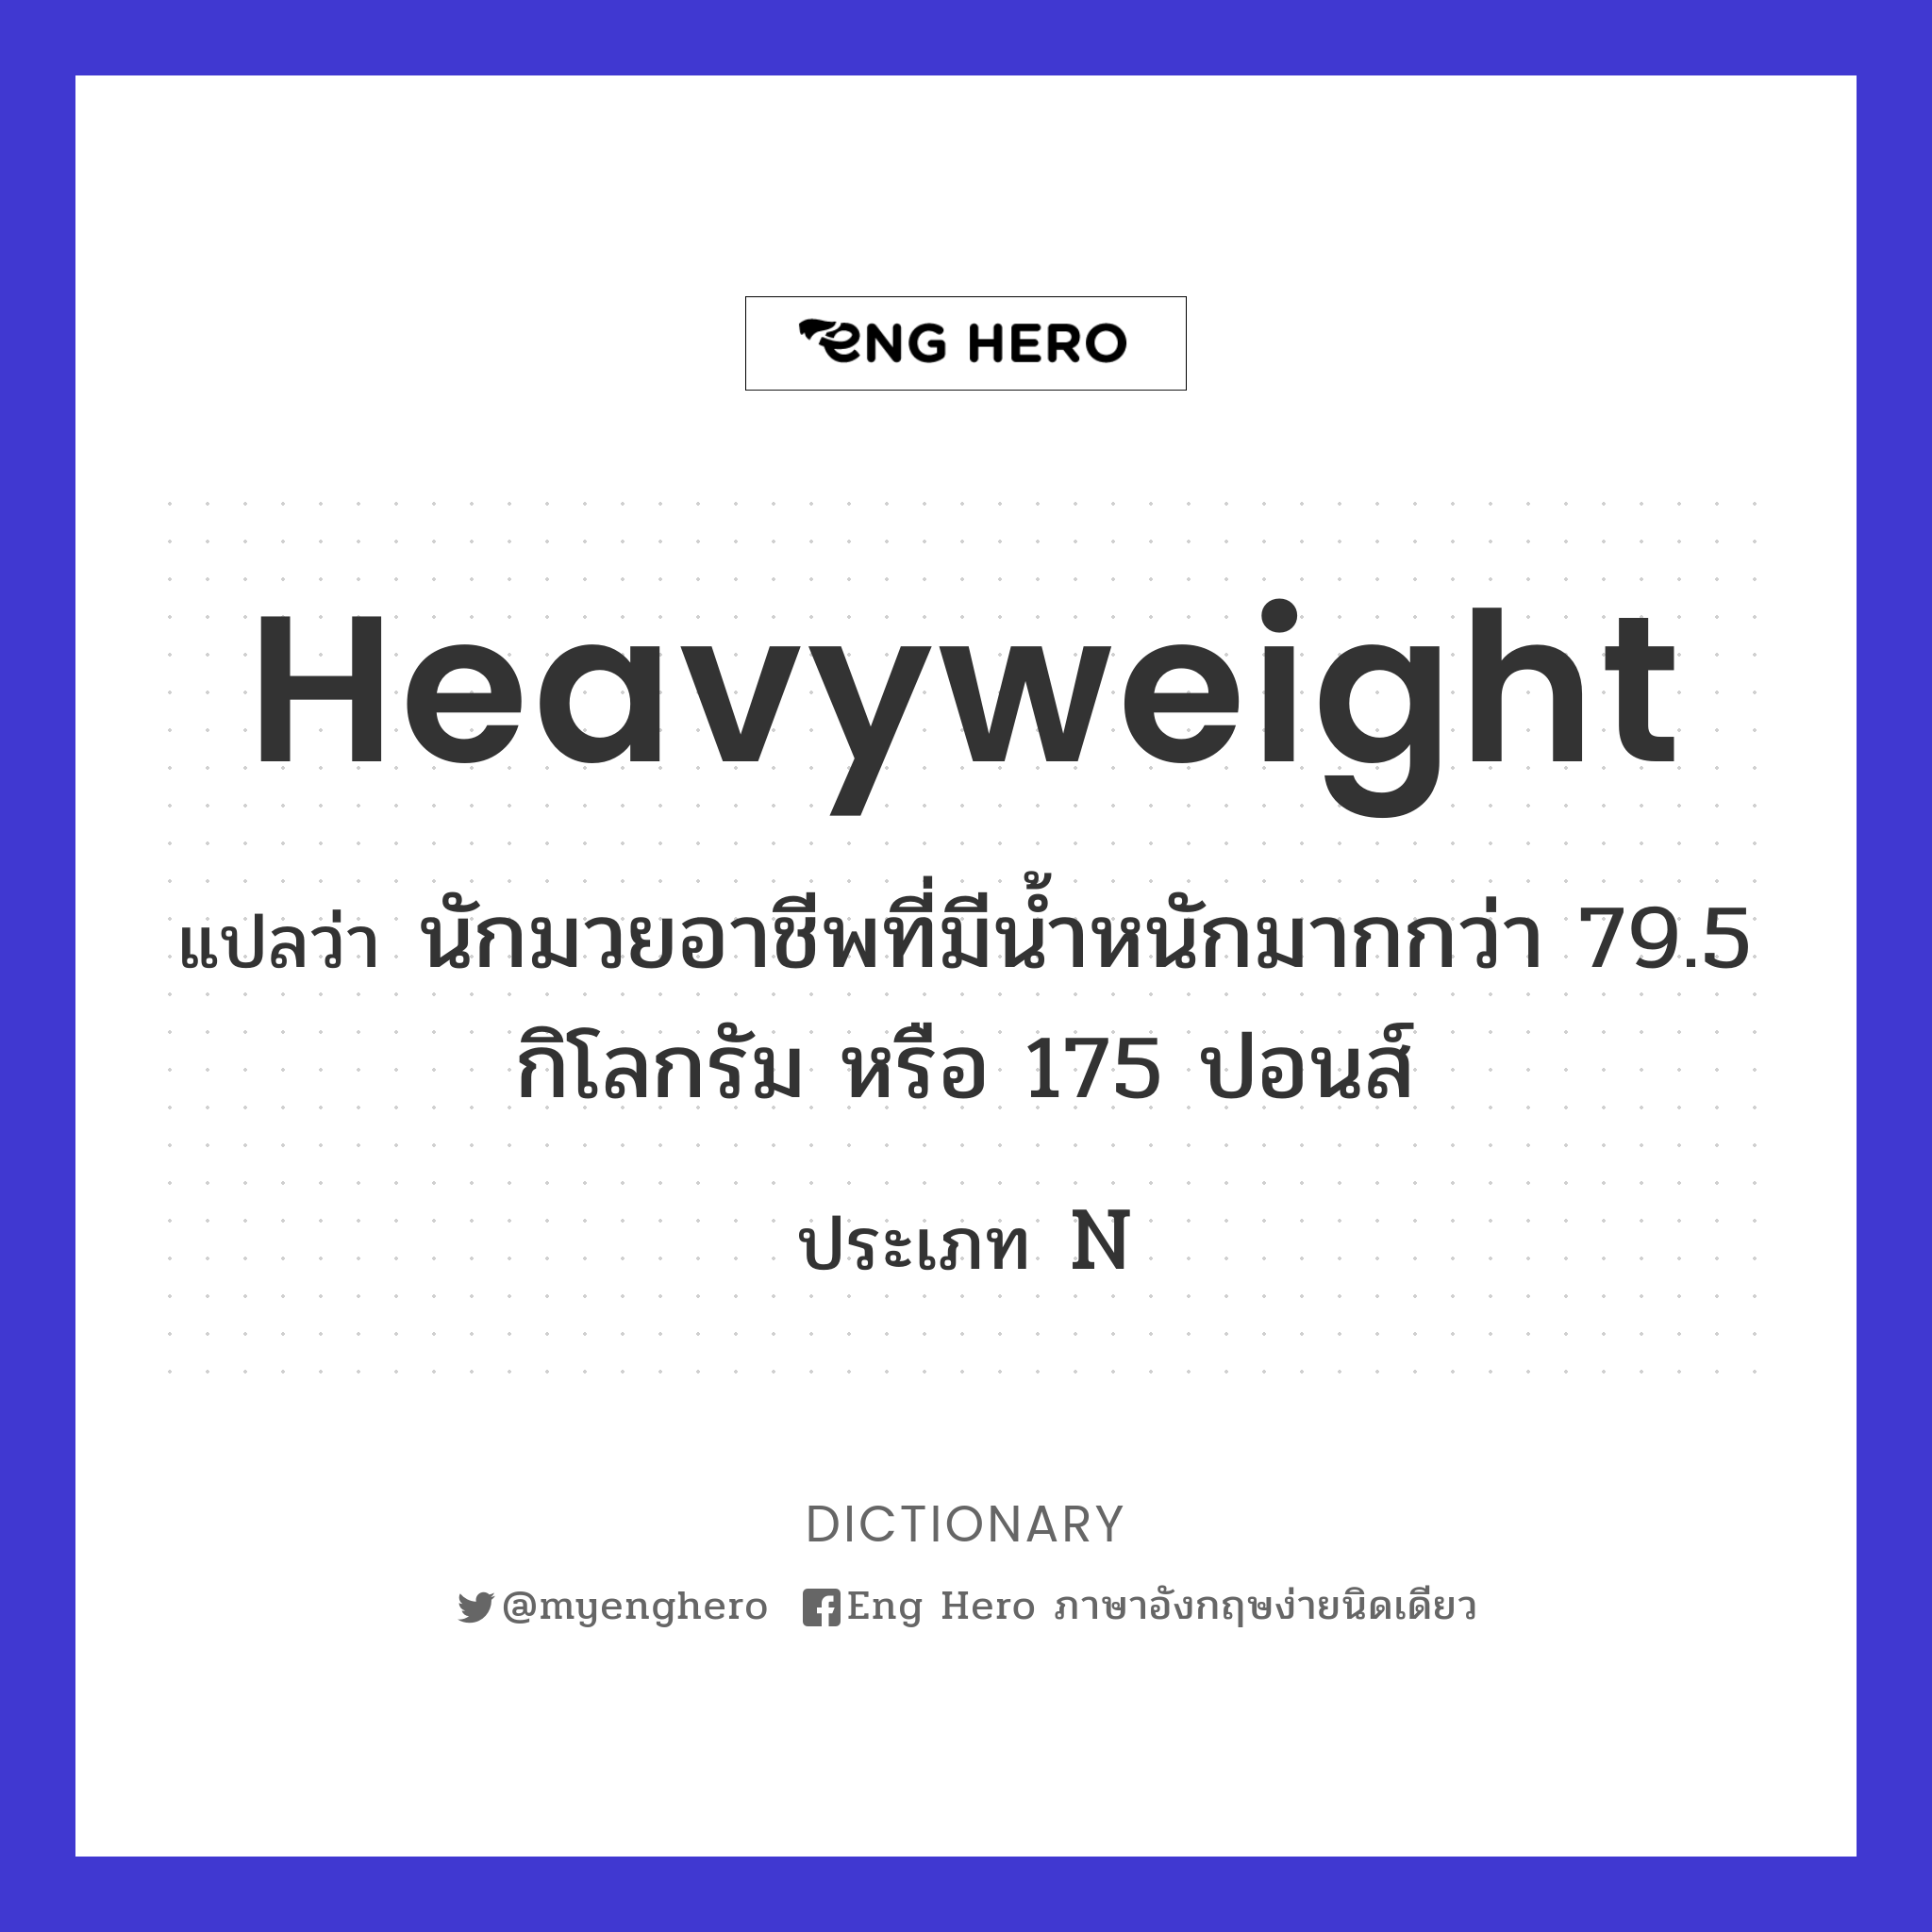 heavyweight